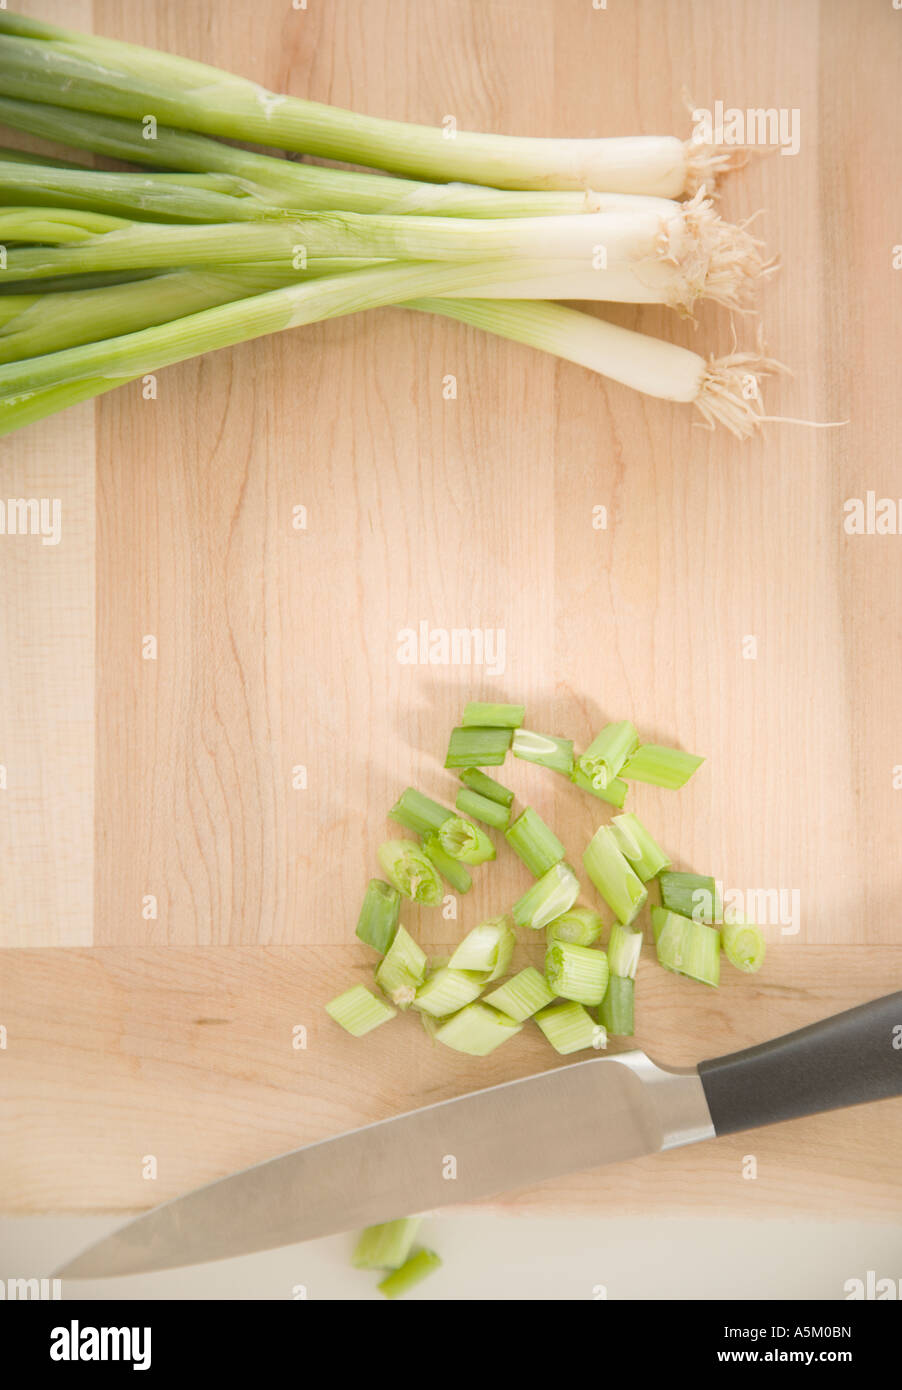 Chopped green onions on cutting board Stock Photo